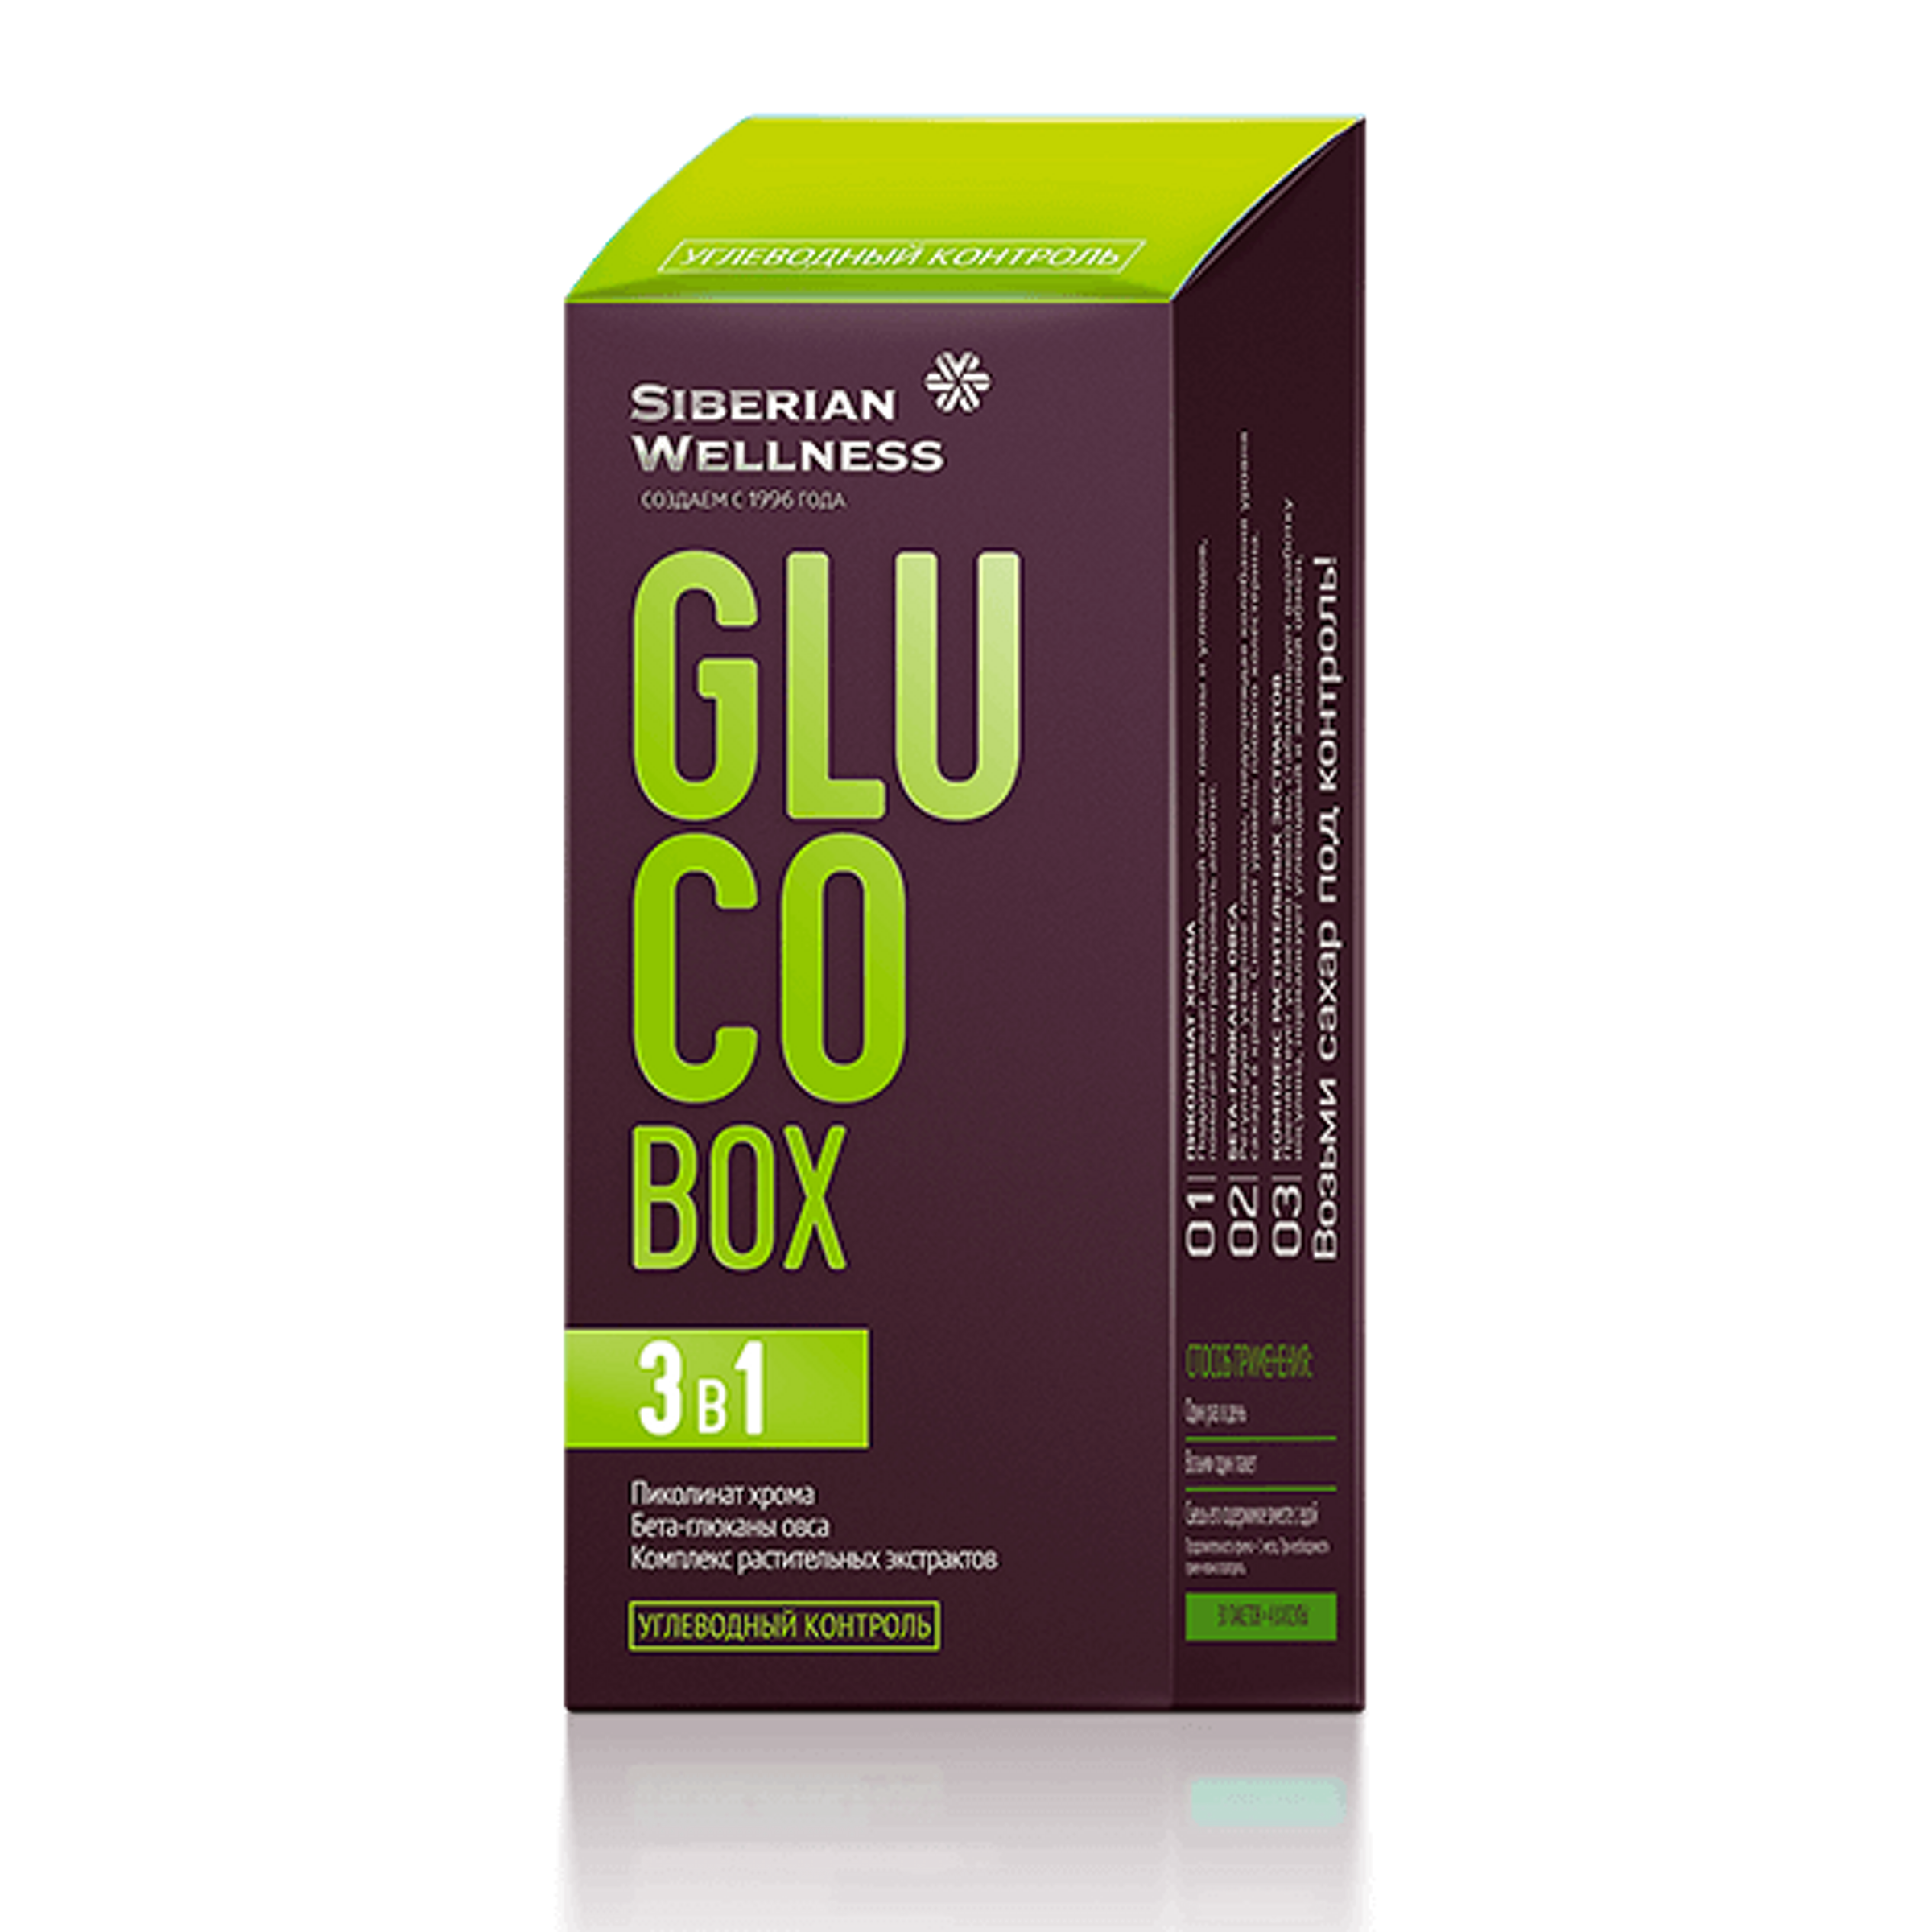 Gluco Box / контроль уровня сахара - набор Daily Box. Gluco Box / контроль уровня. Gluco Box / контроль уровня сахара. Глюко бокс Siberian Wellness.